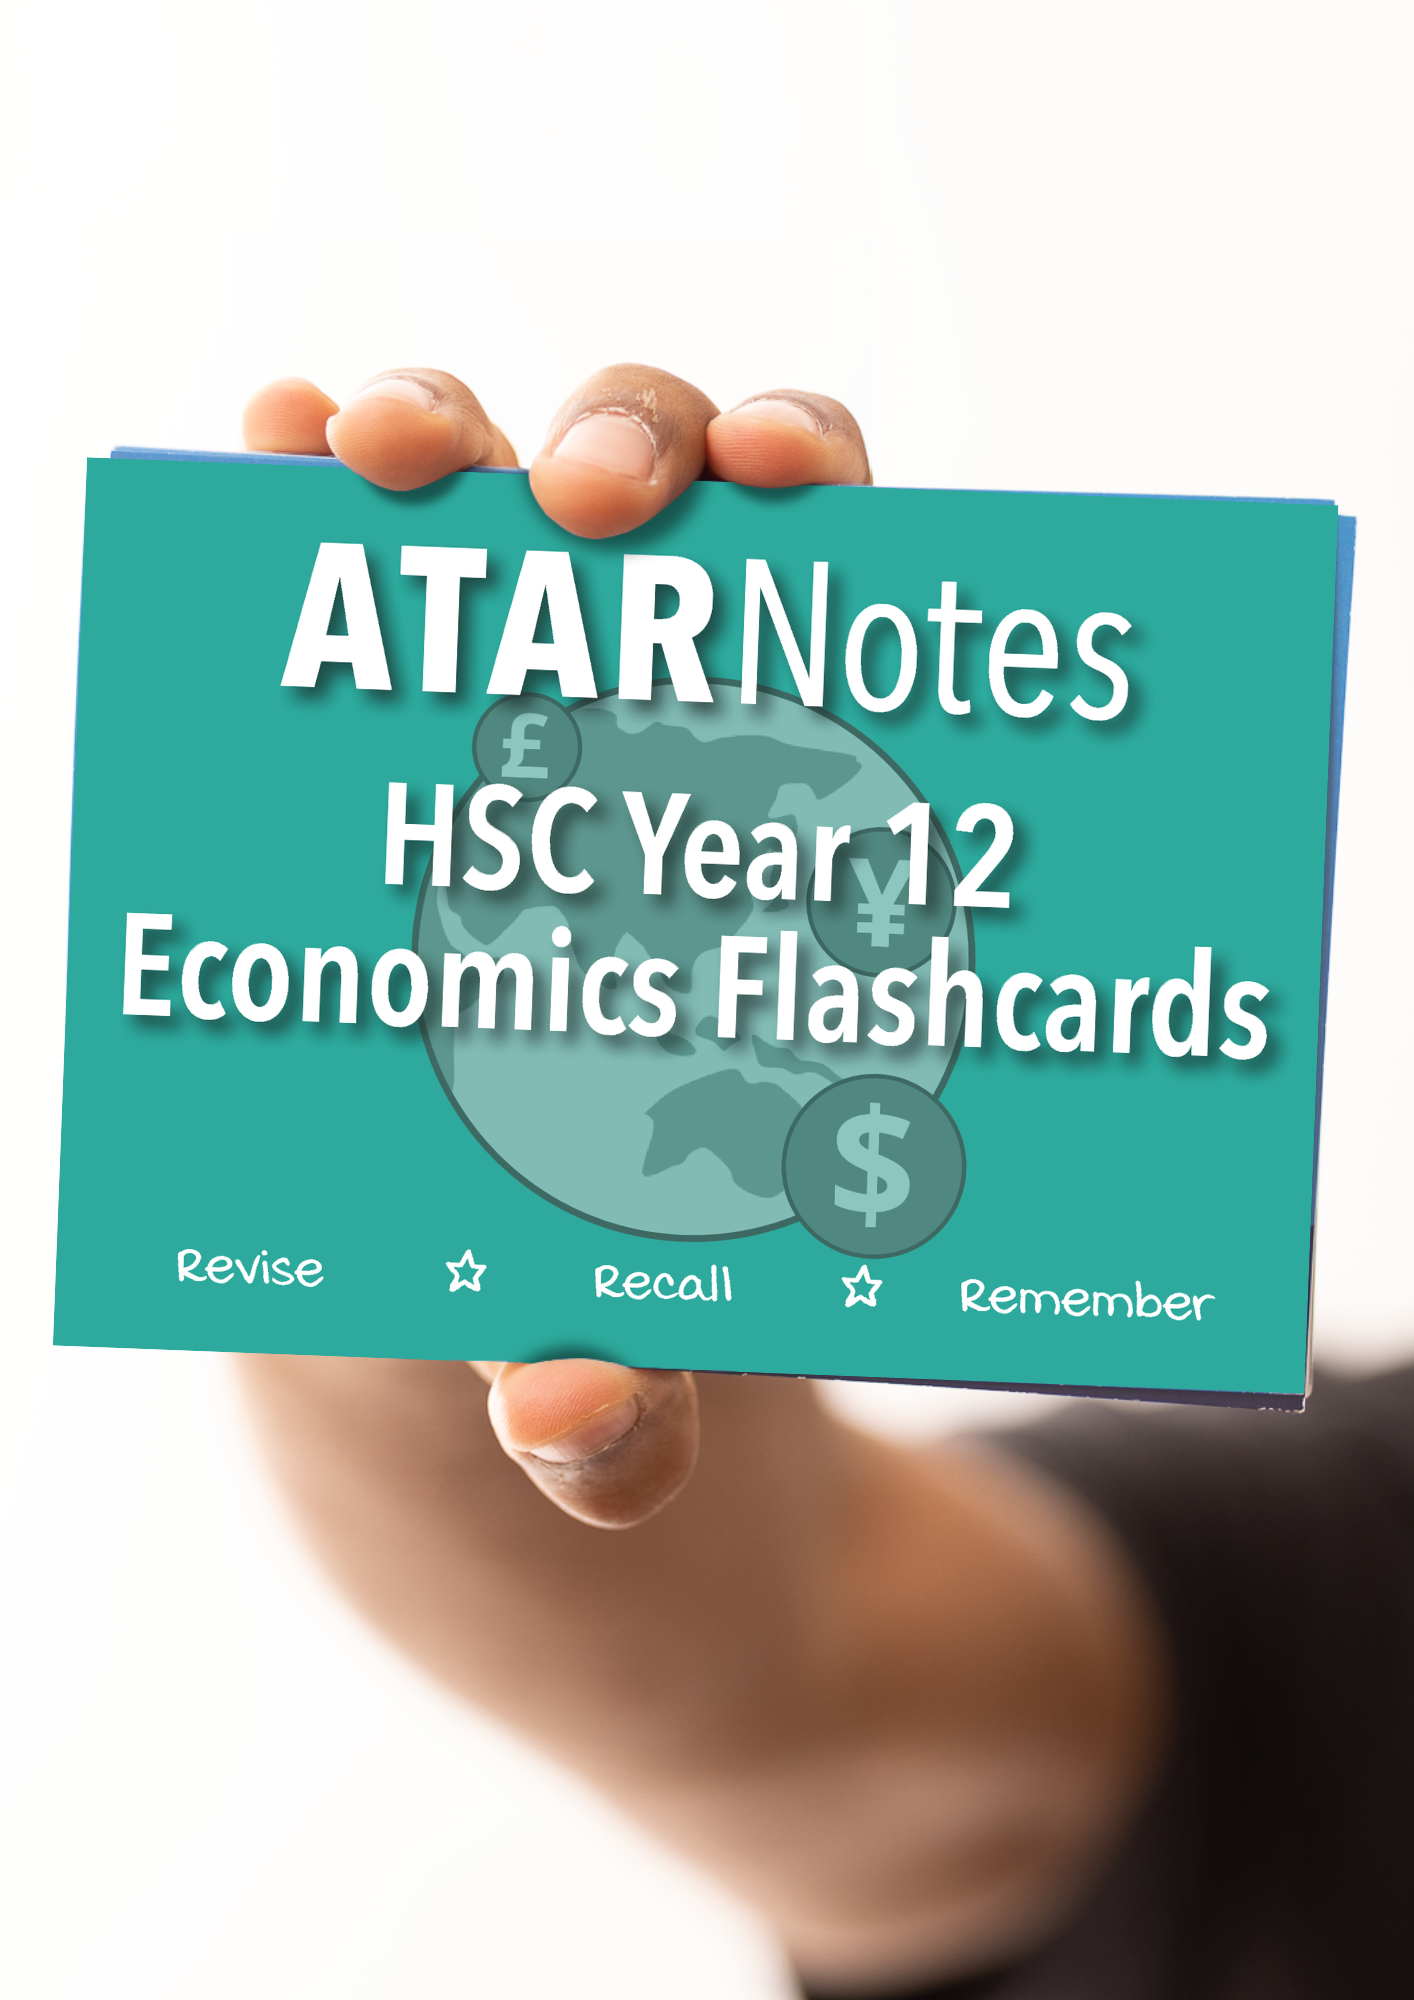 ATAR Notes Flashcards: HSC Year 12 Economics